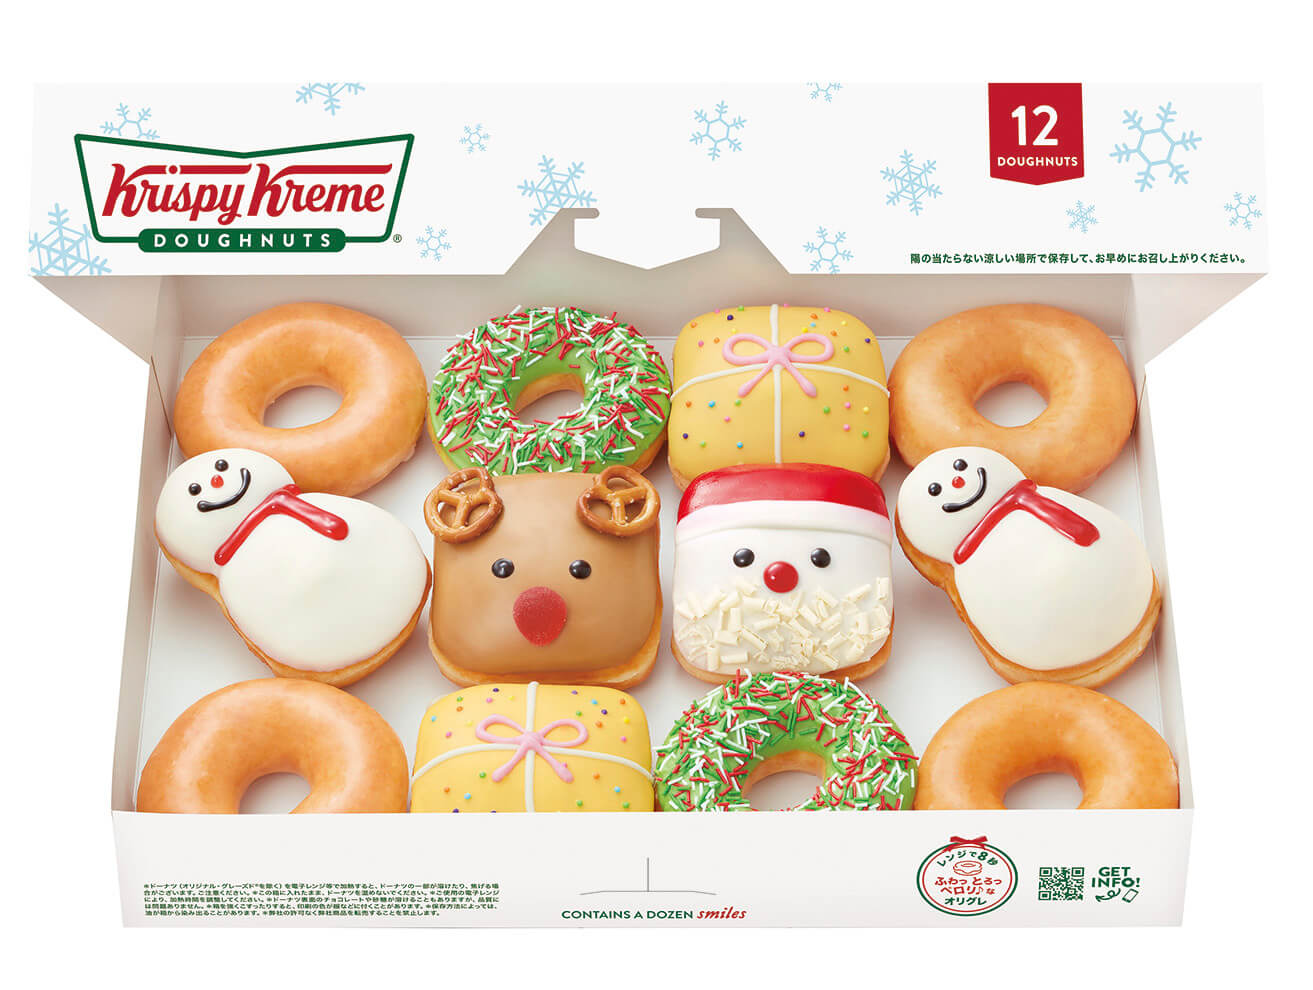 krispy-kreme-doughnuts-holly-jolly-holiday-2